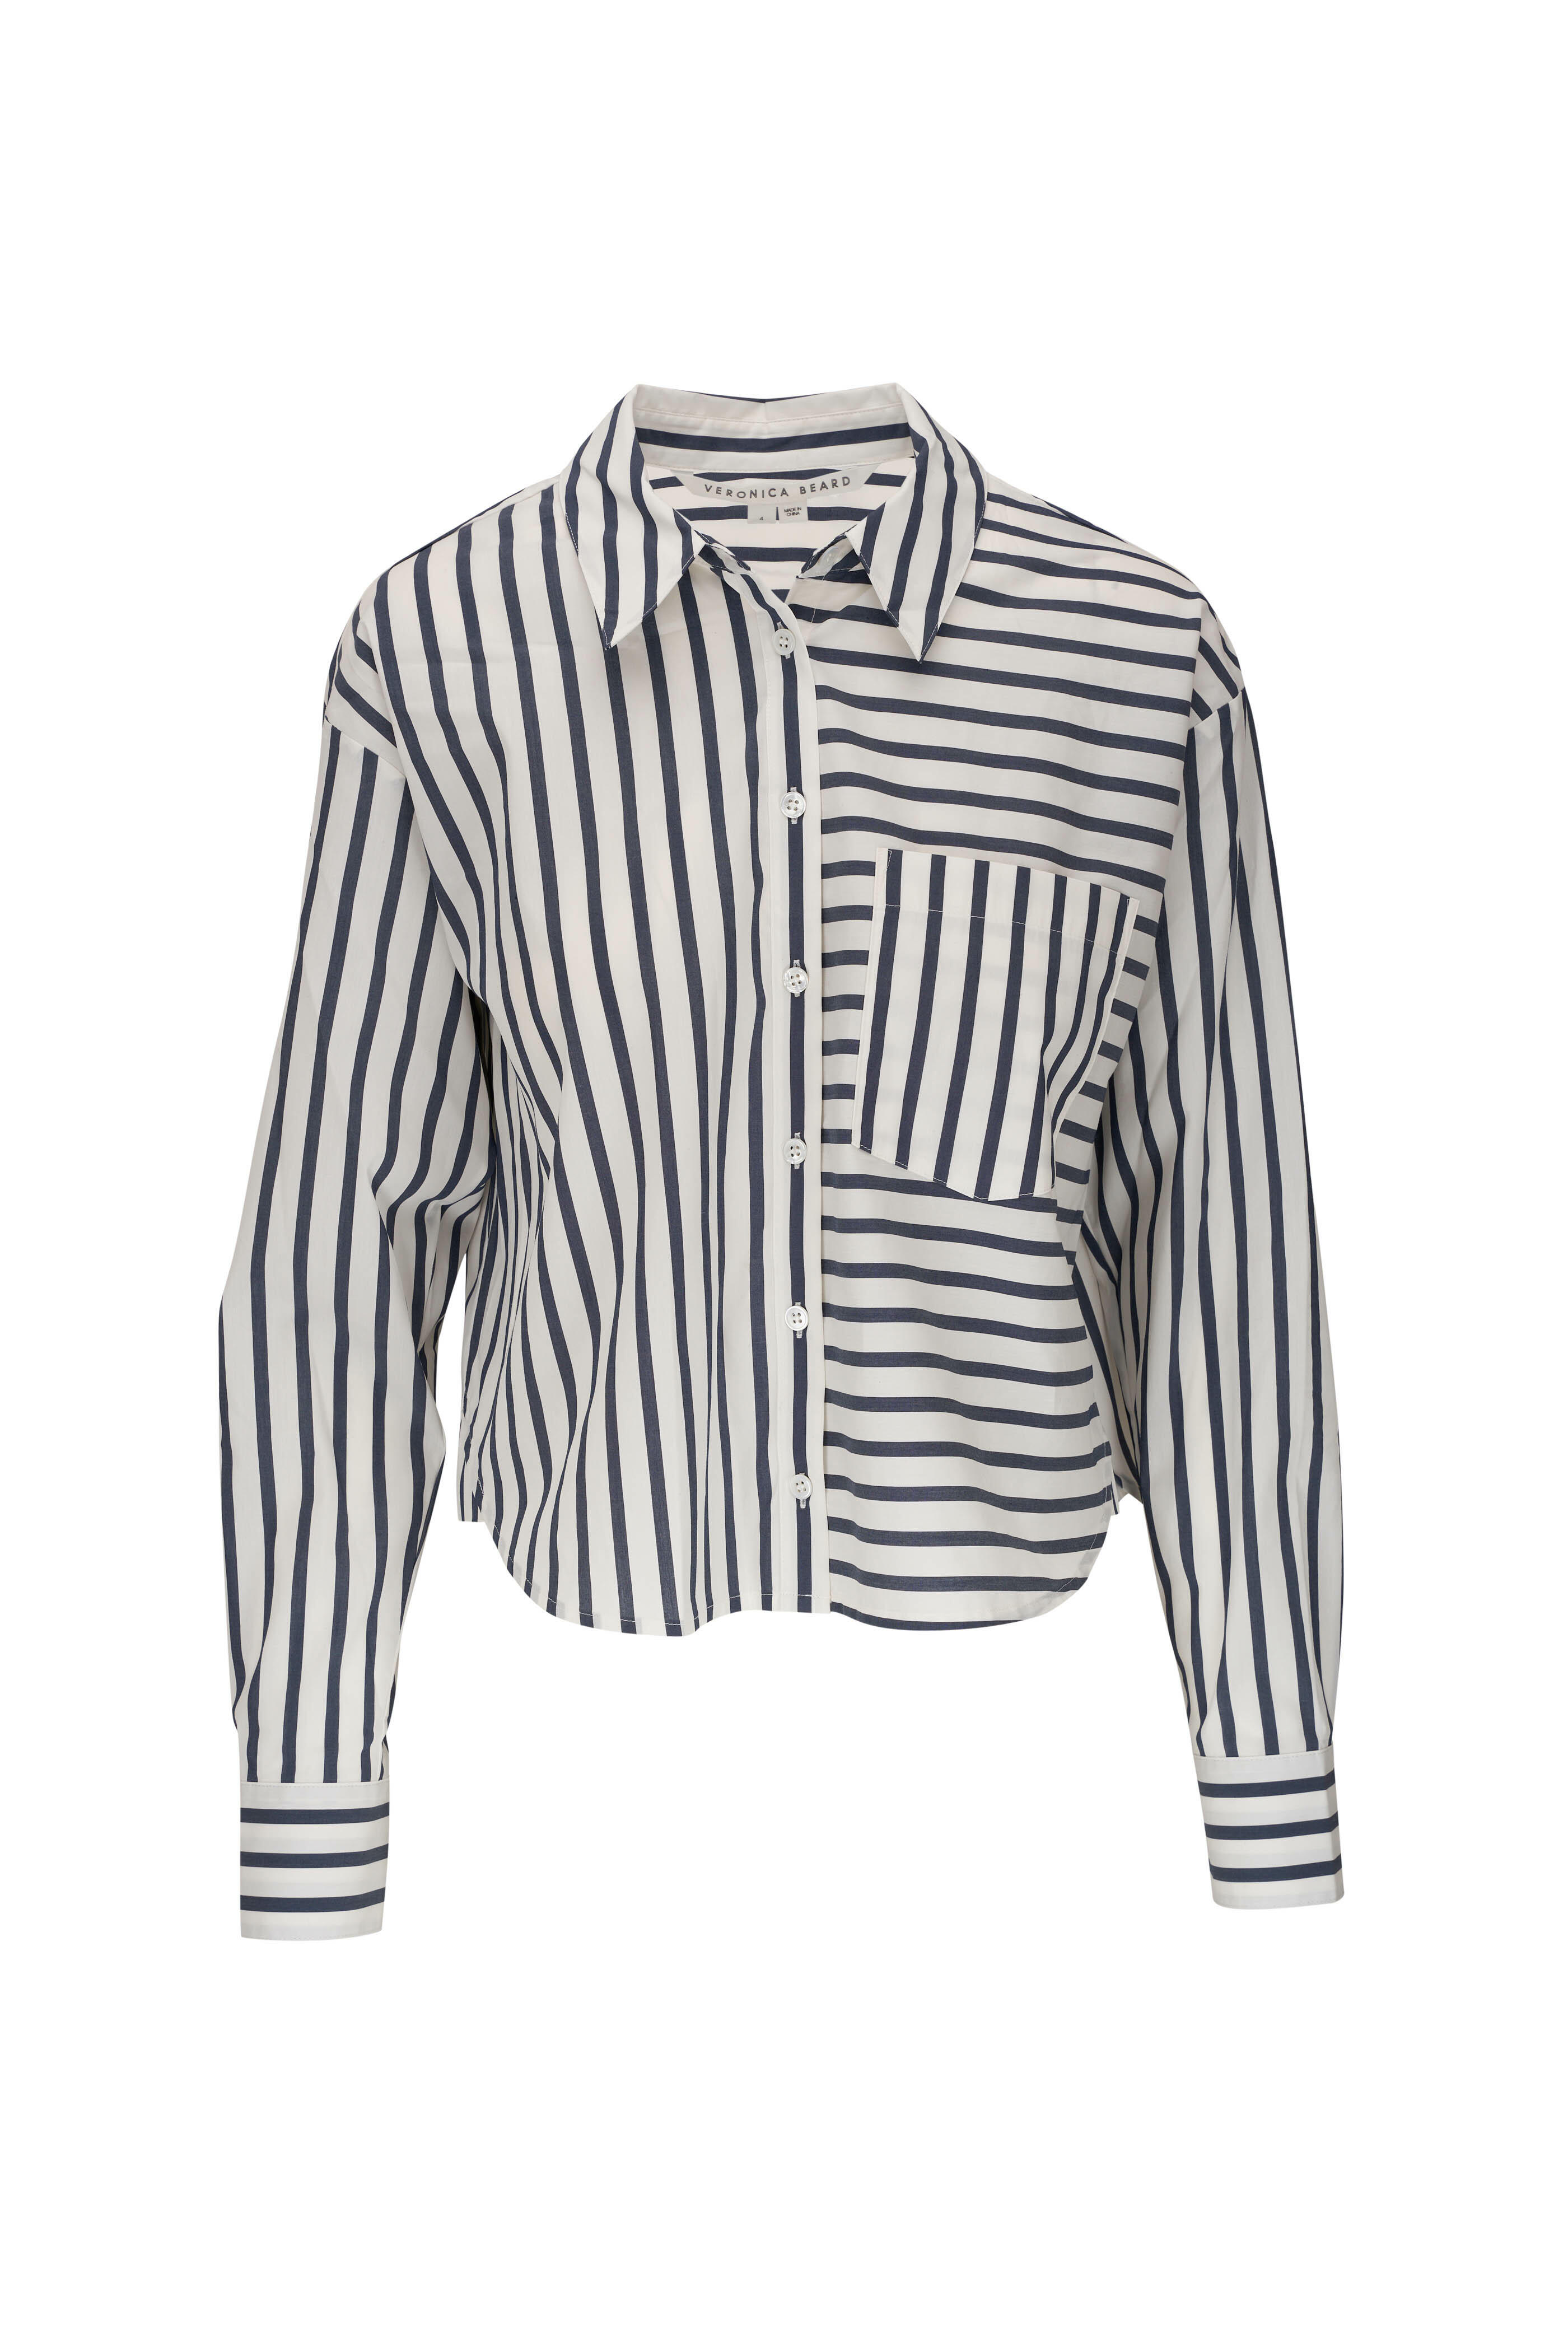 Veronica Beard - Aderes Marine Off White Striped Shirt